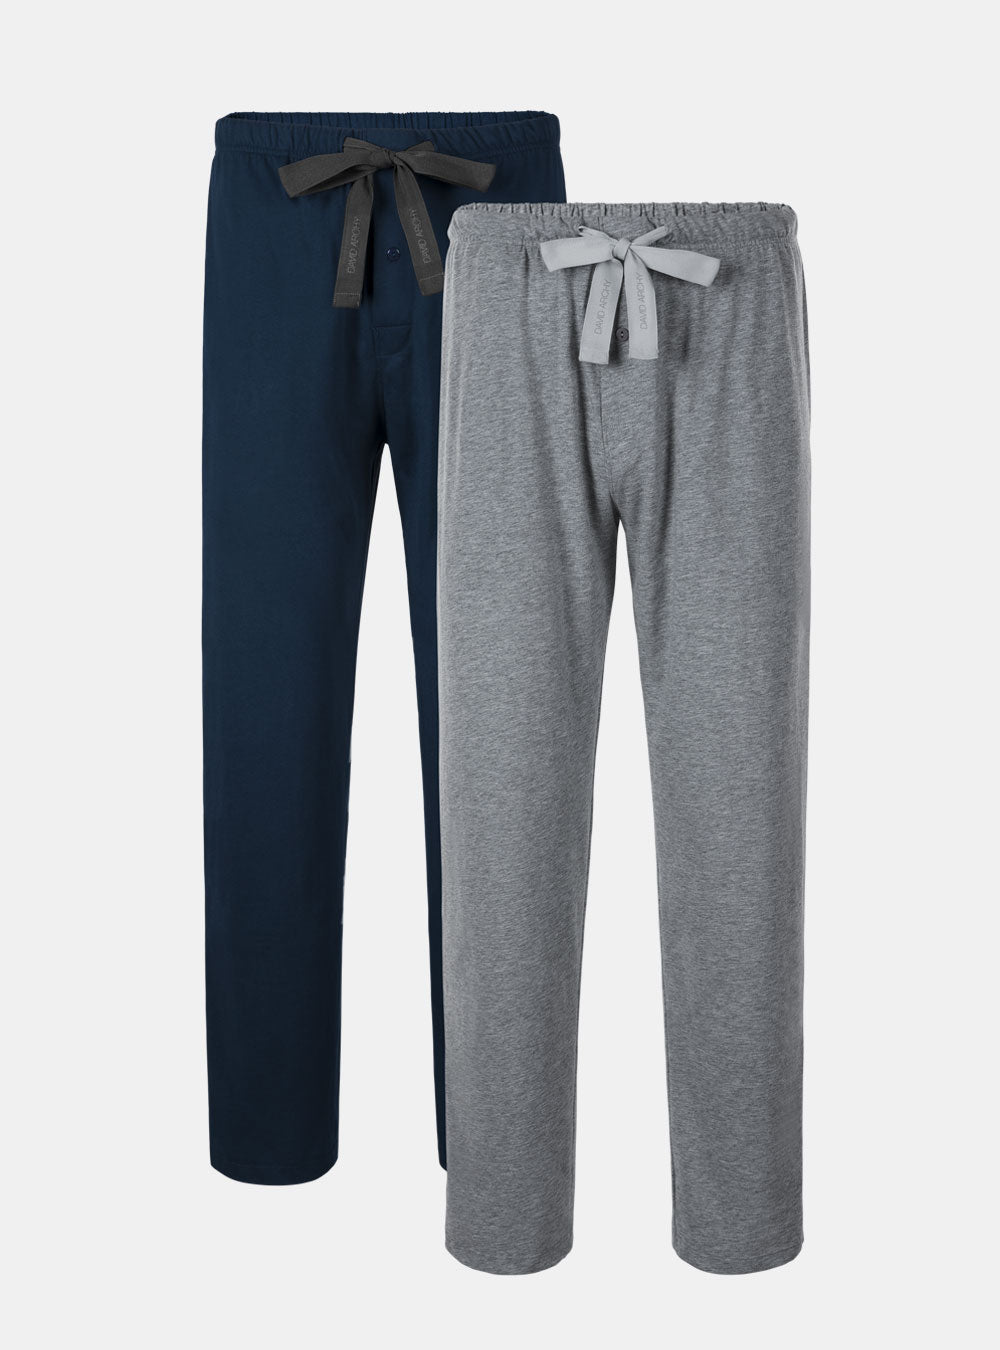 David Archy 2 Packs Cotton Knit Pajama Pants Comfy Mens Soft